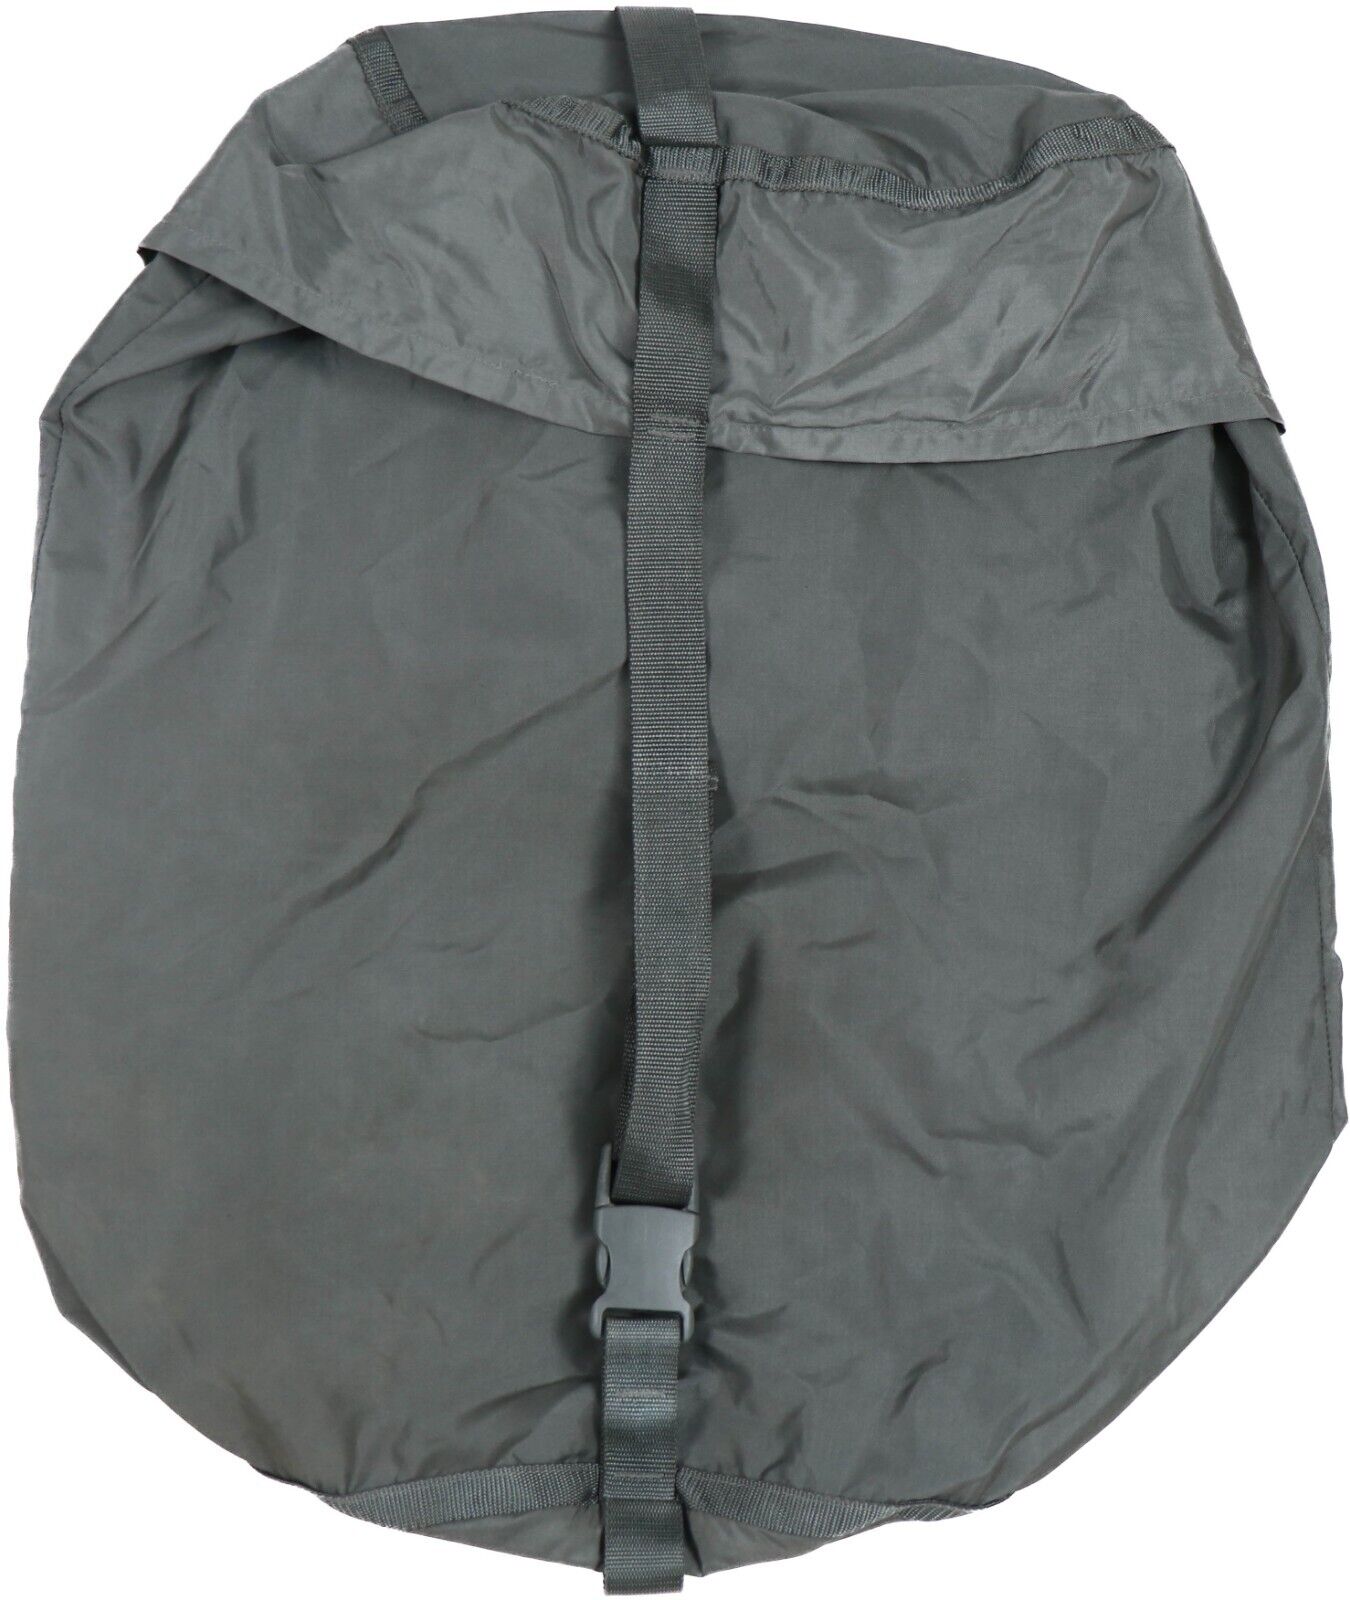 Large - Foliage Green Compression Stuff Sack Modular Sleeping Bag MSS Sack Pack